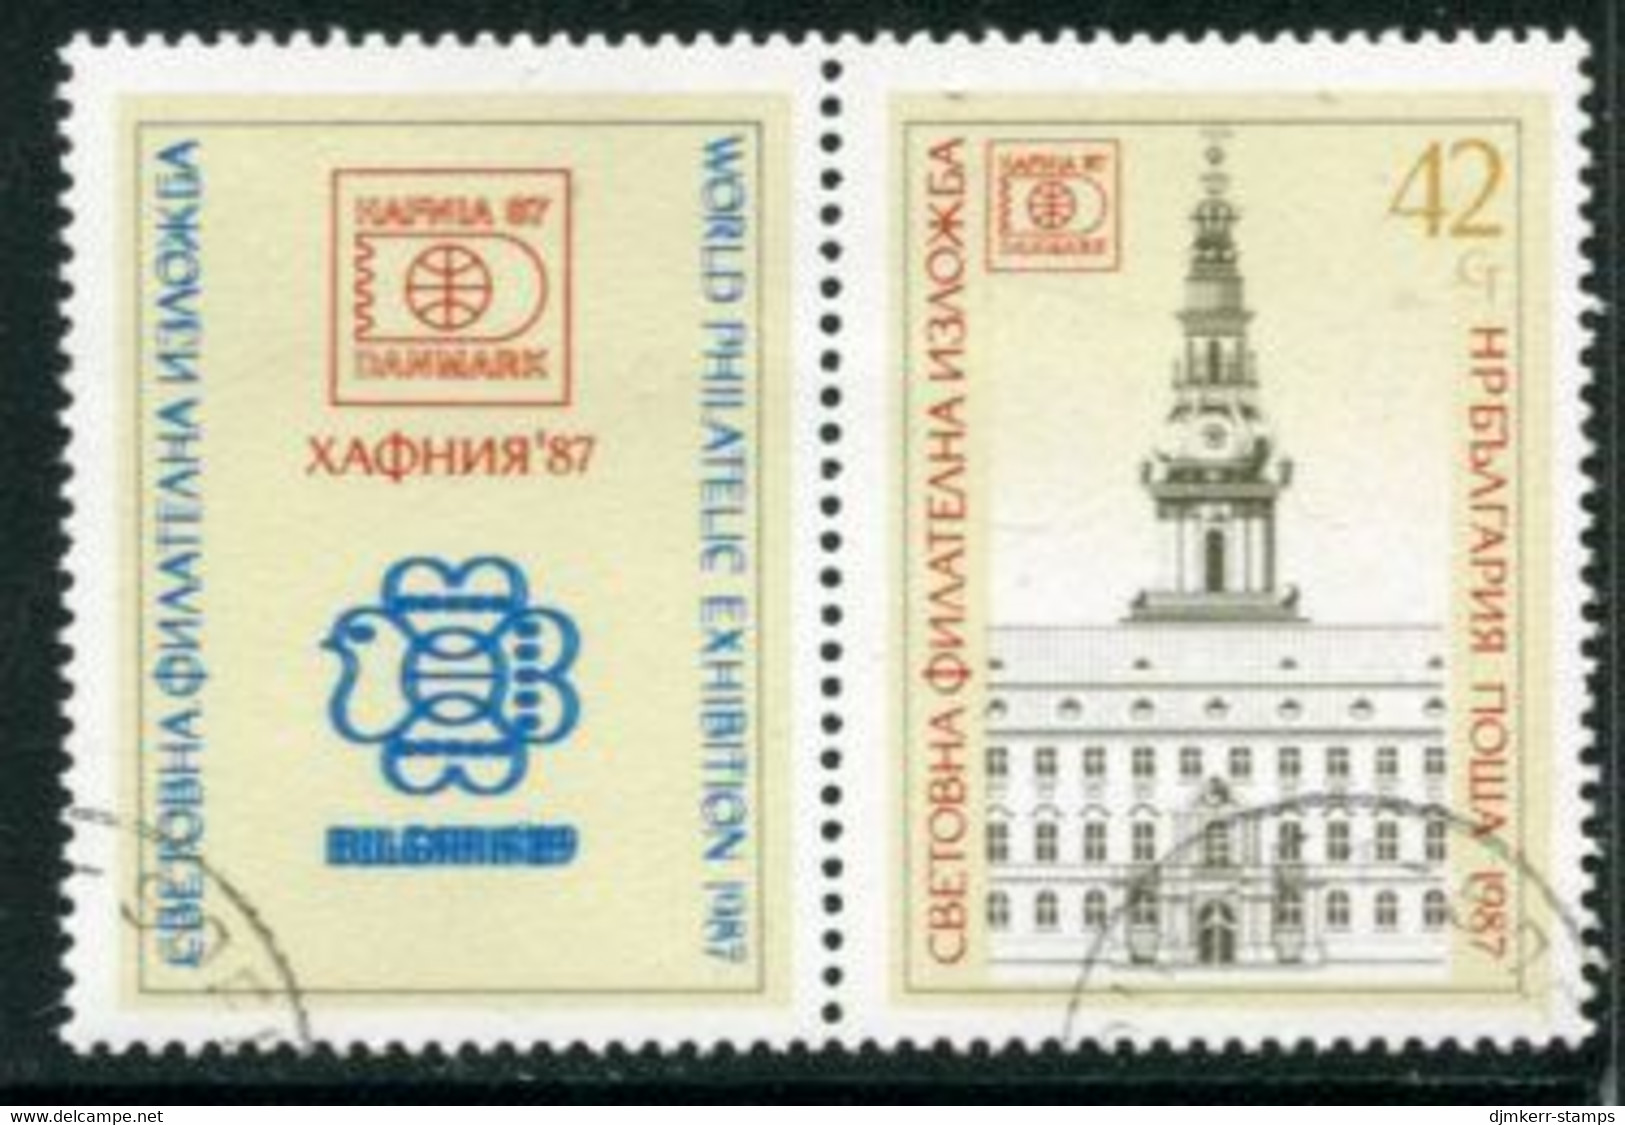 BULGARIA 1987 HAFNIA Stamp Exhibition Used.  Michel 3597 Zf - Usados